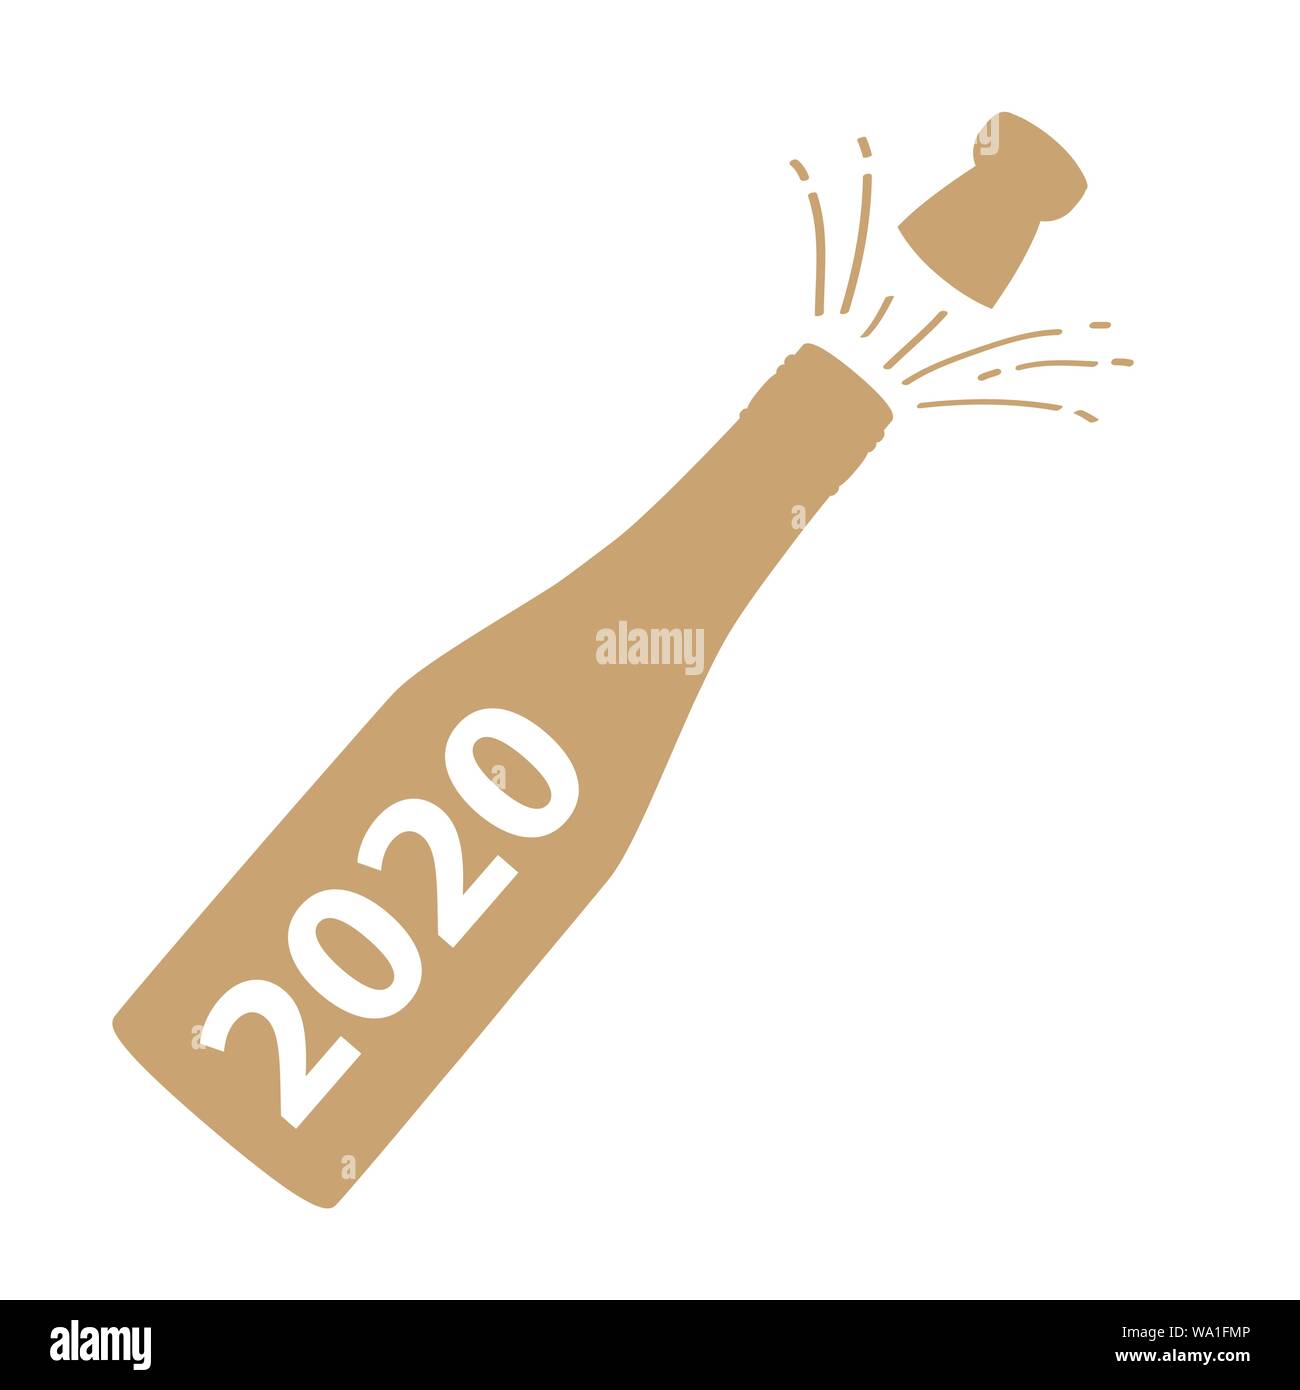 bottle of champagne 2020 silhouette isolated on white background vector illustration EPS10 Stock Vector